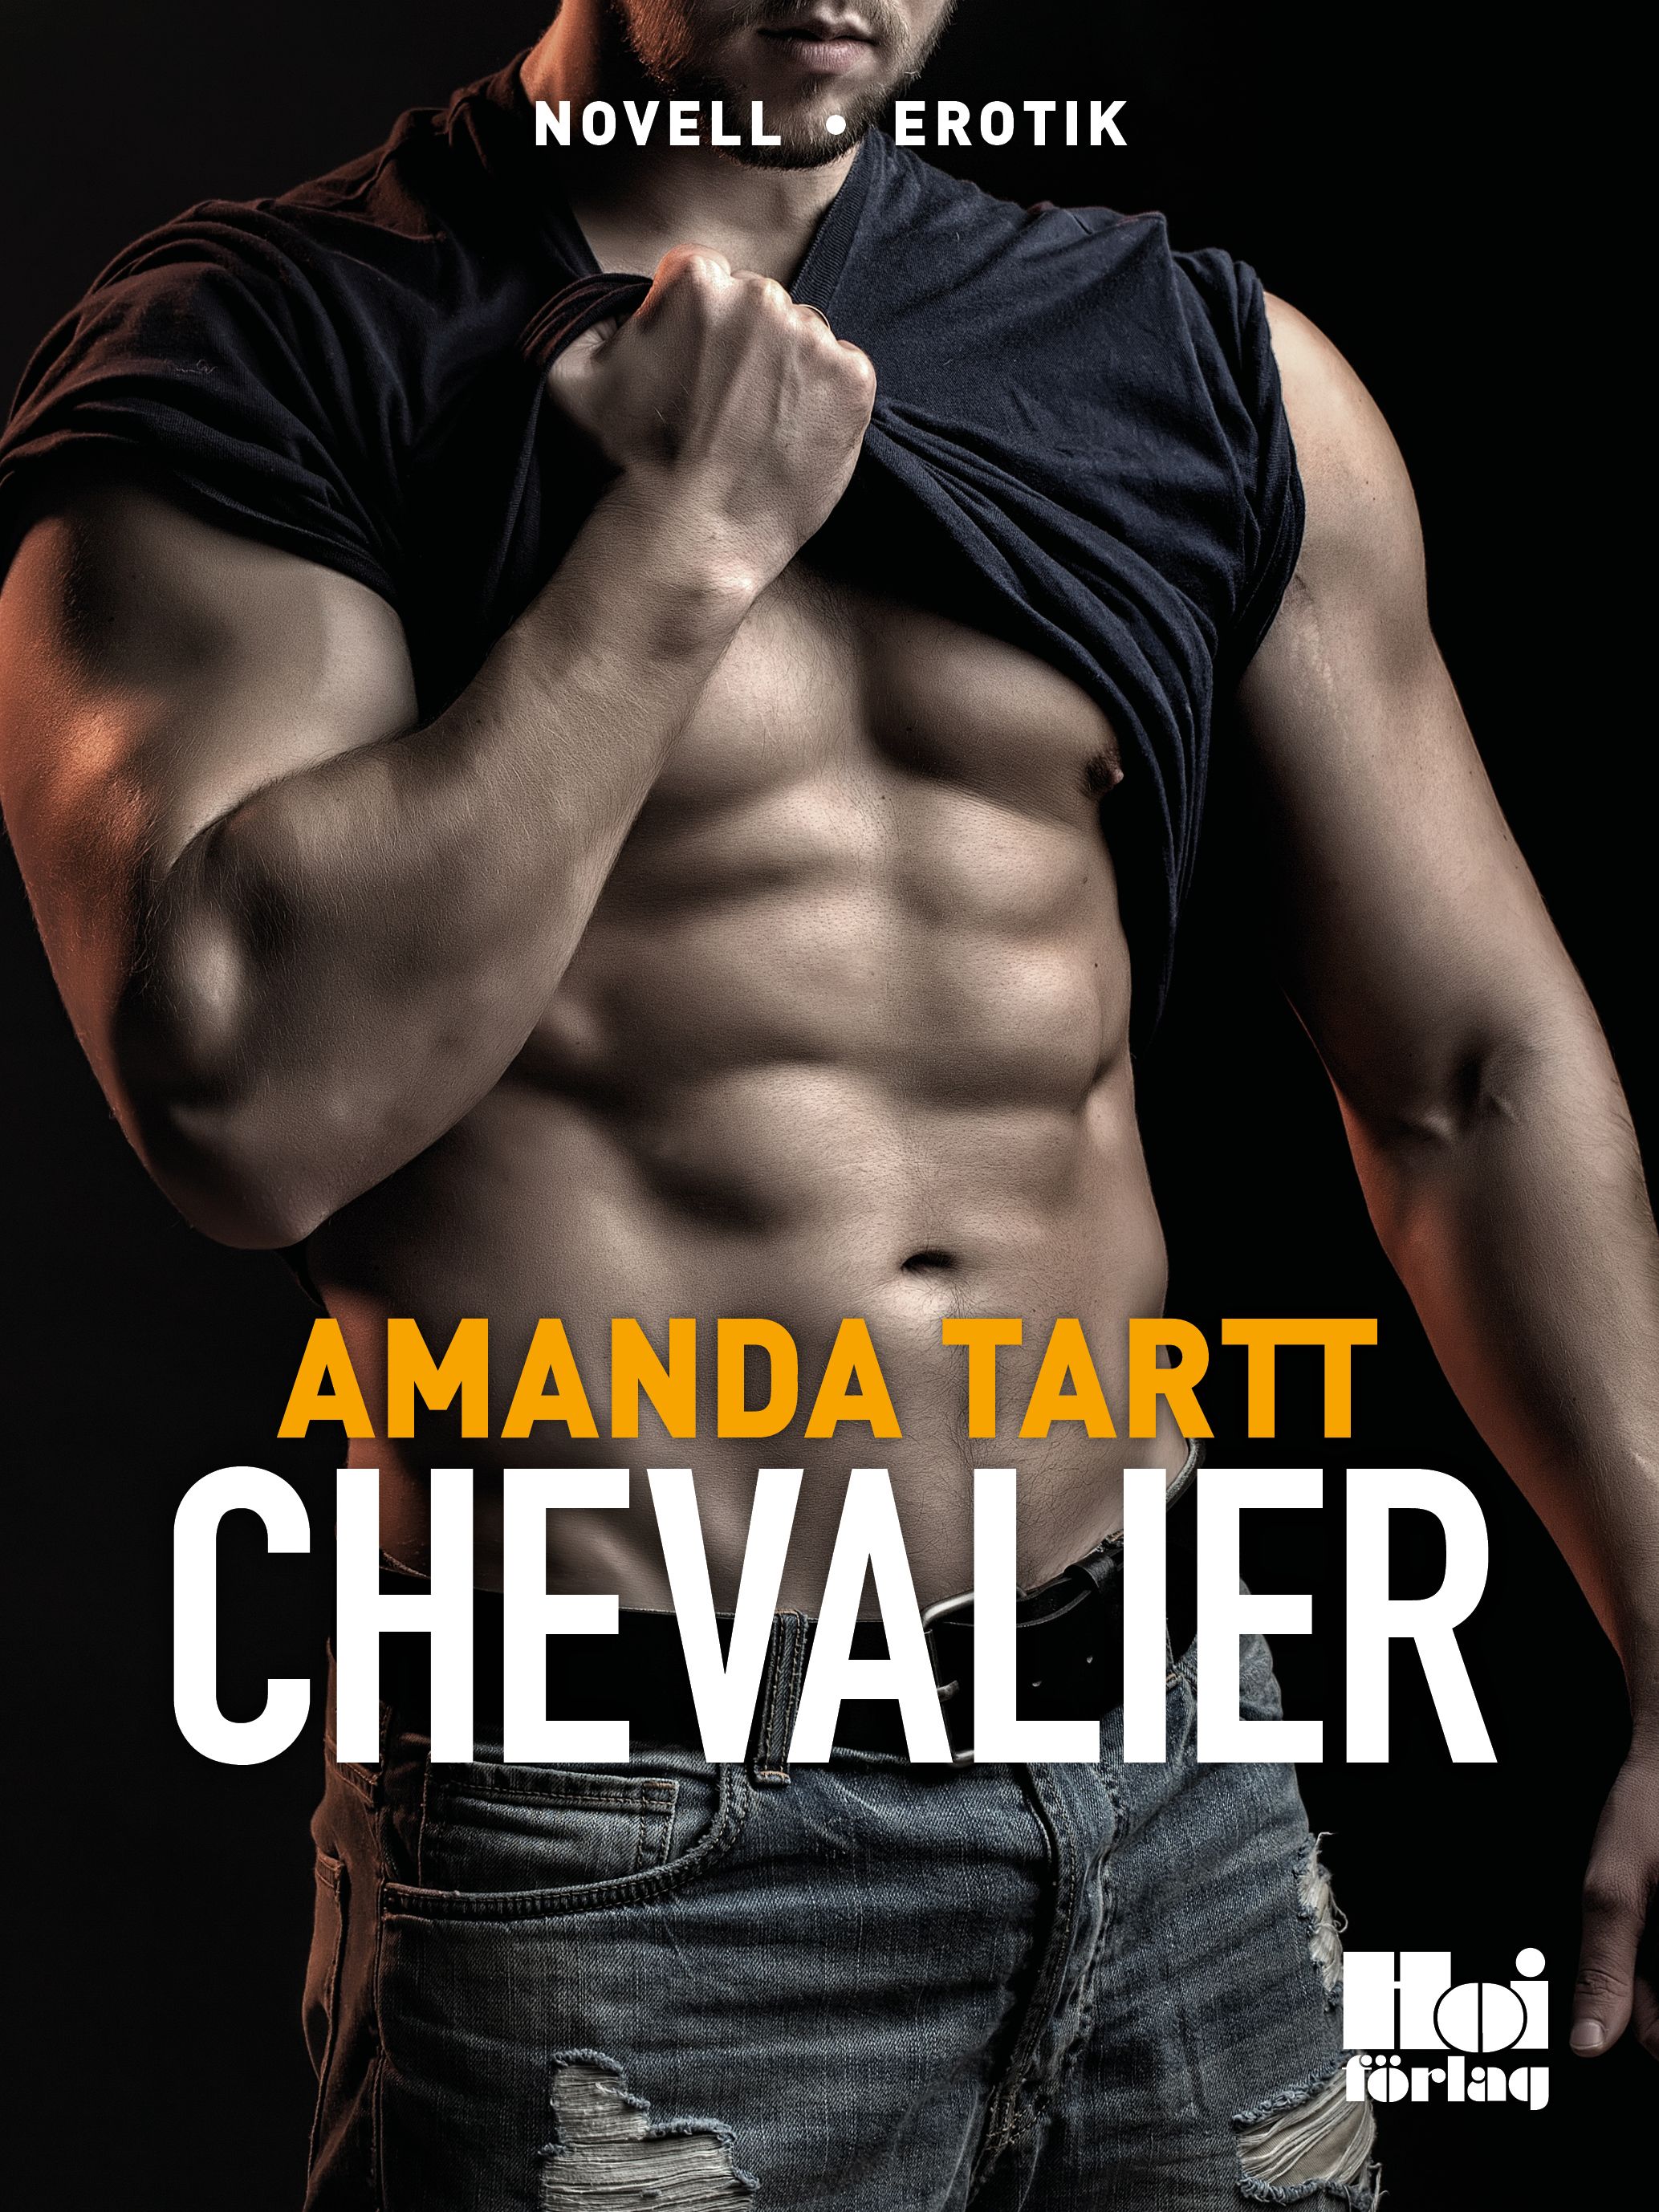 Chevalier, eBook by Amanda Tartt